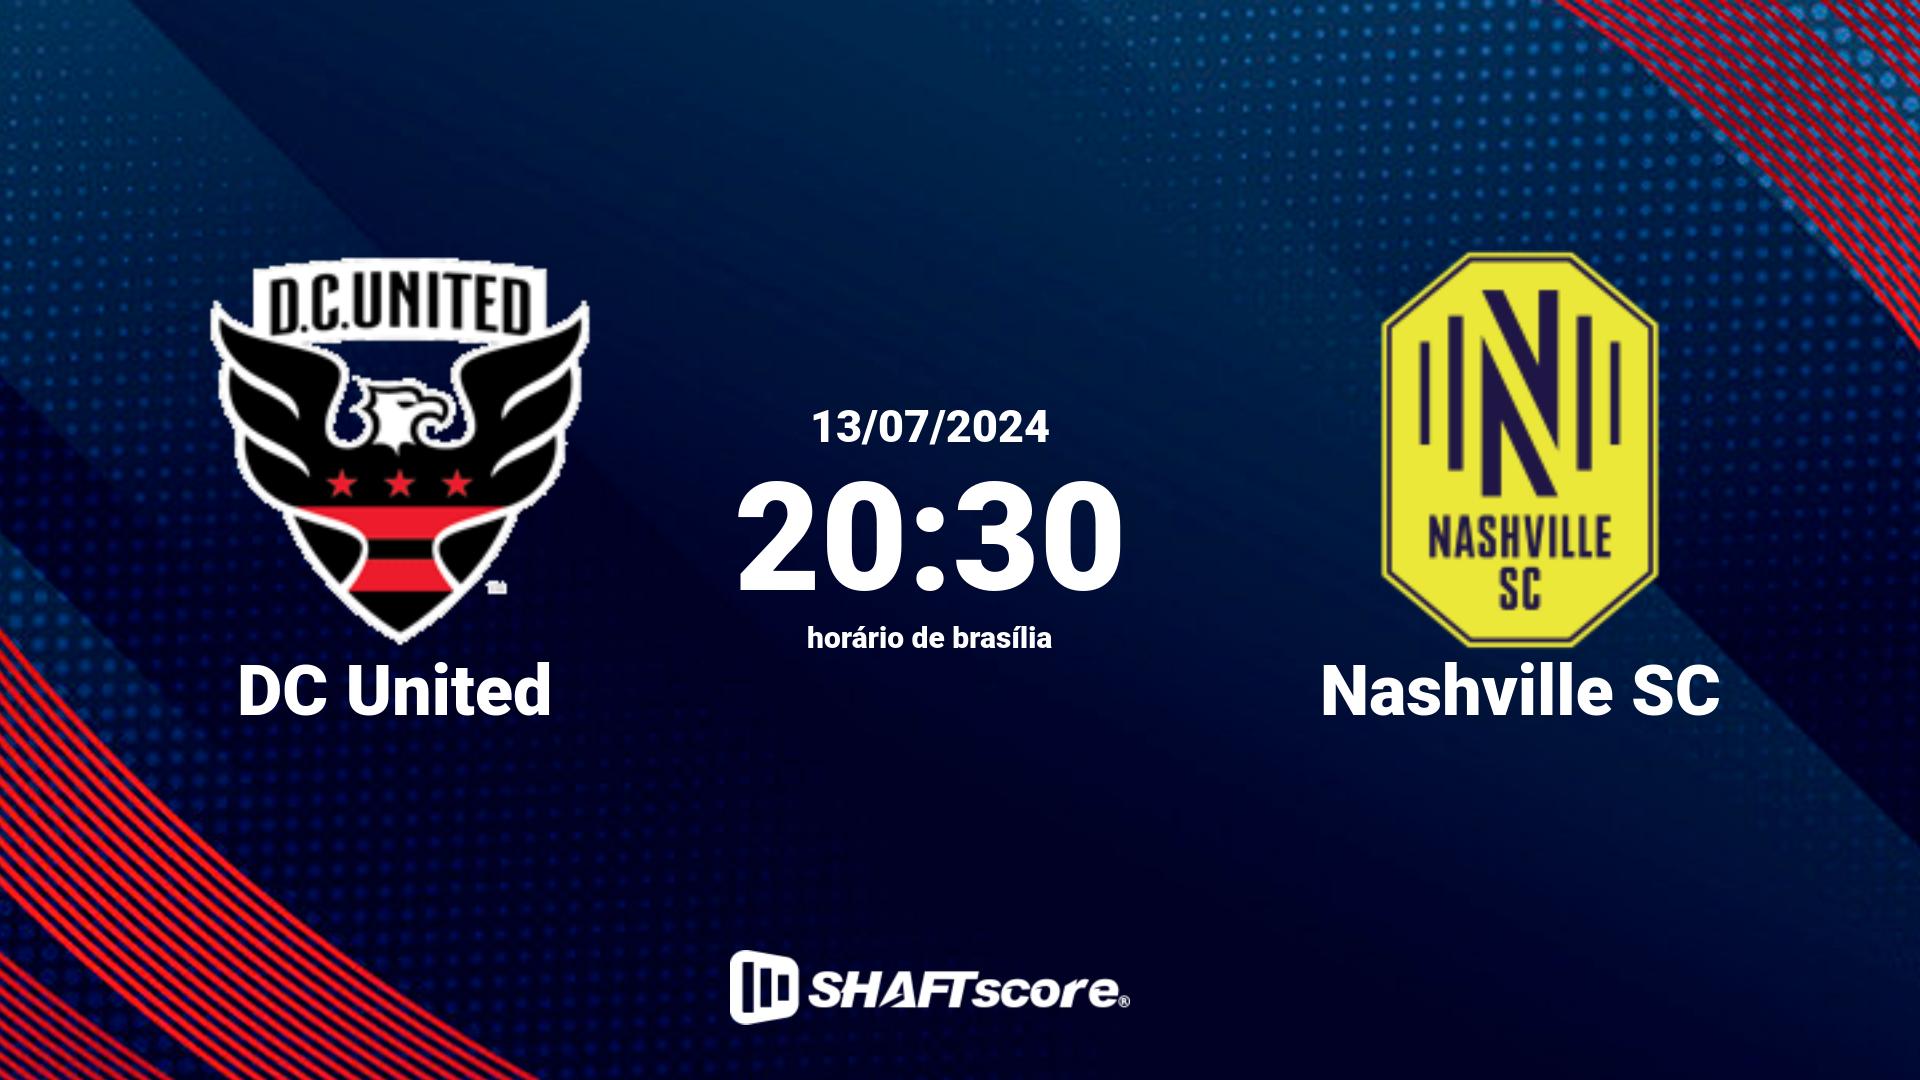 Estatísticas do jogo DC United vs Nashville SC 13.07 20:30